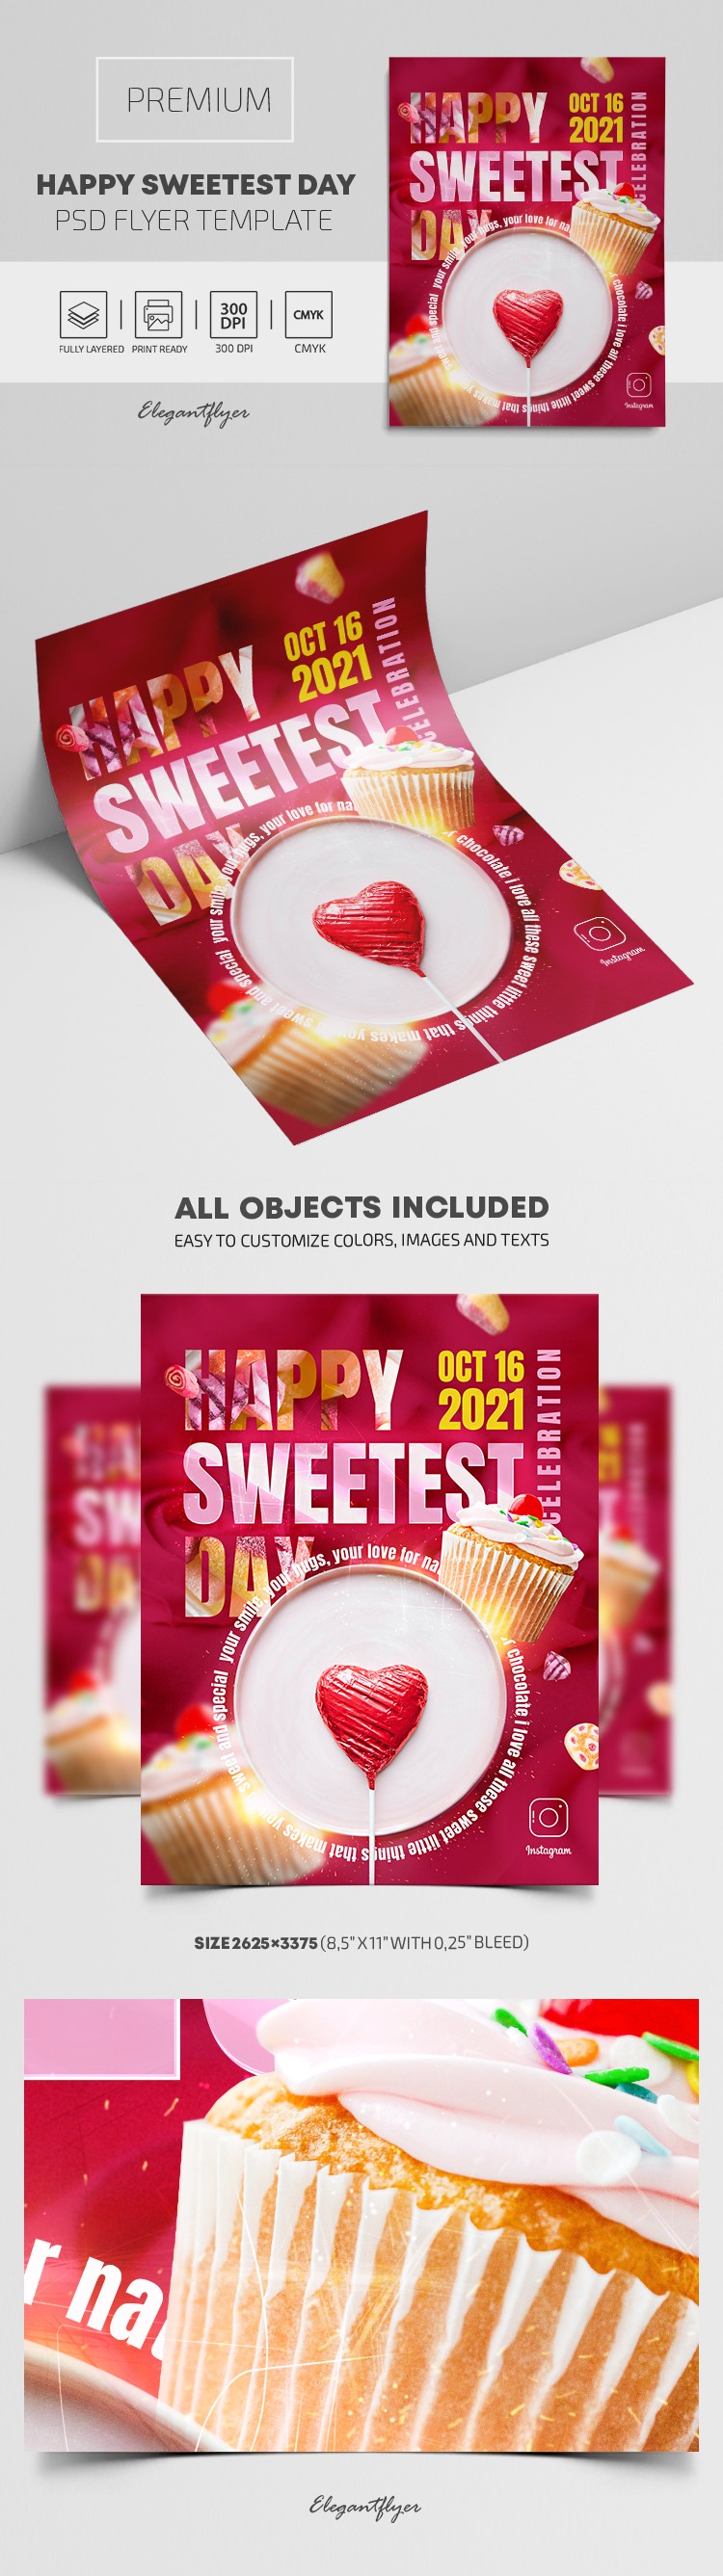 Happy Sweetest Day Flyer by ElegantFlyer